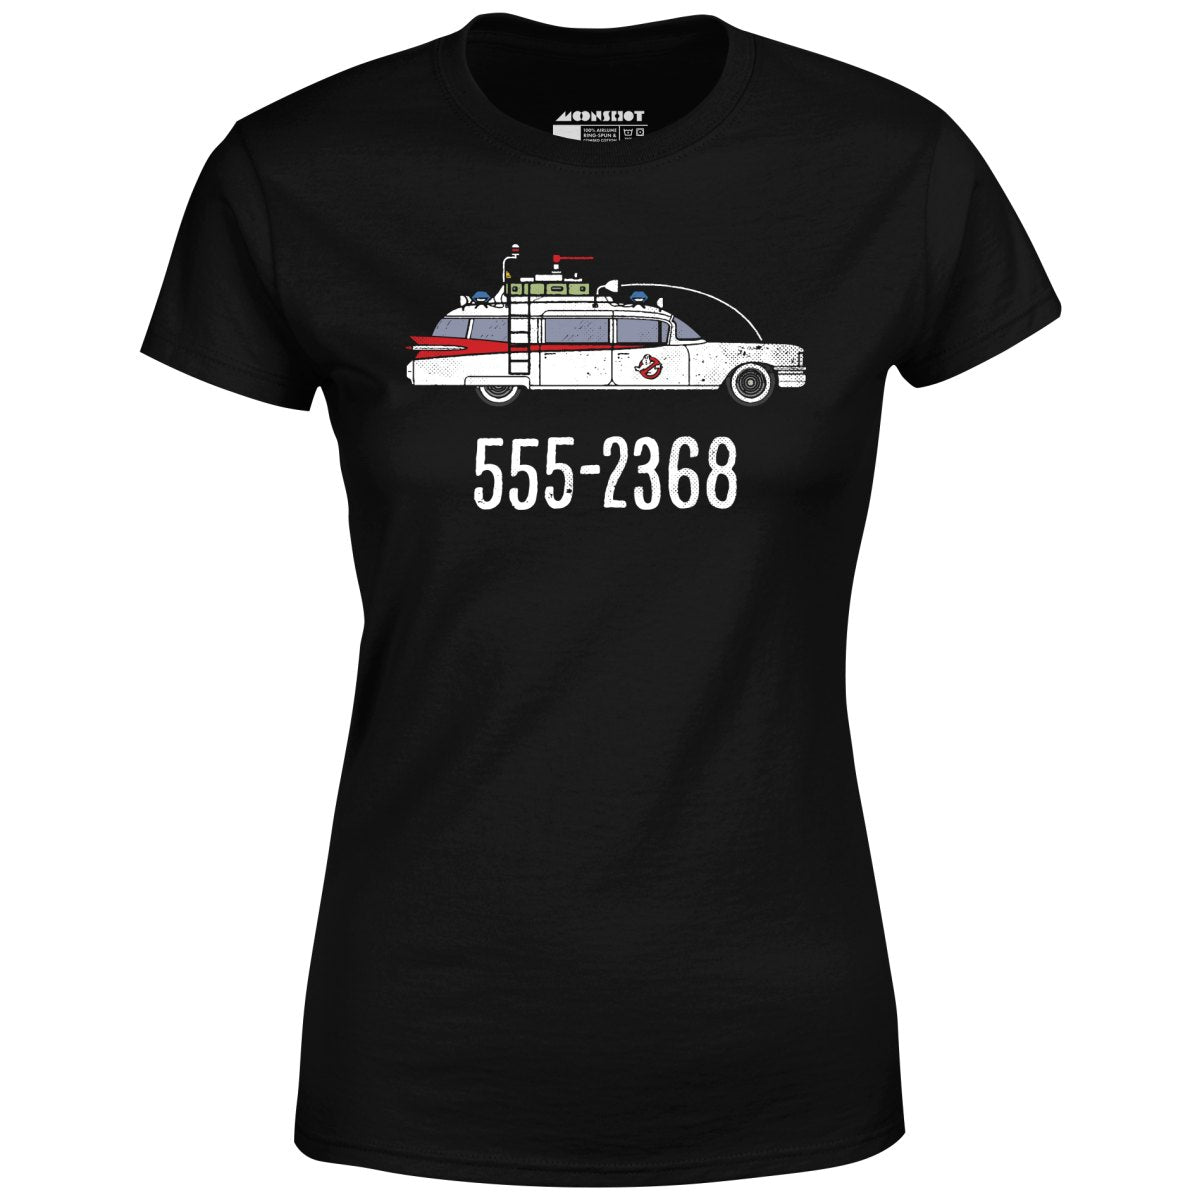 555-2368 - Women's T-Shirt